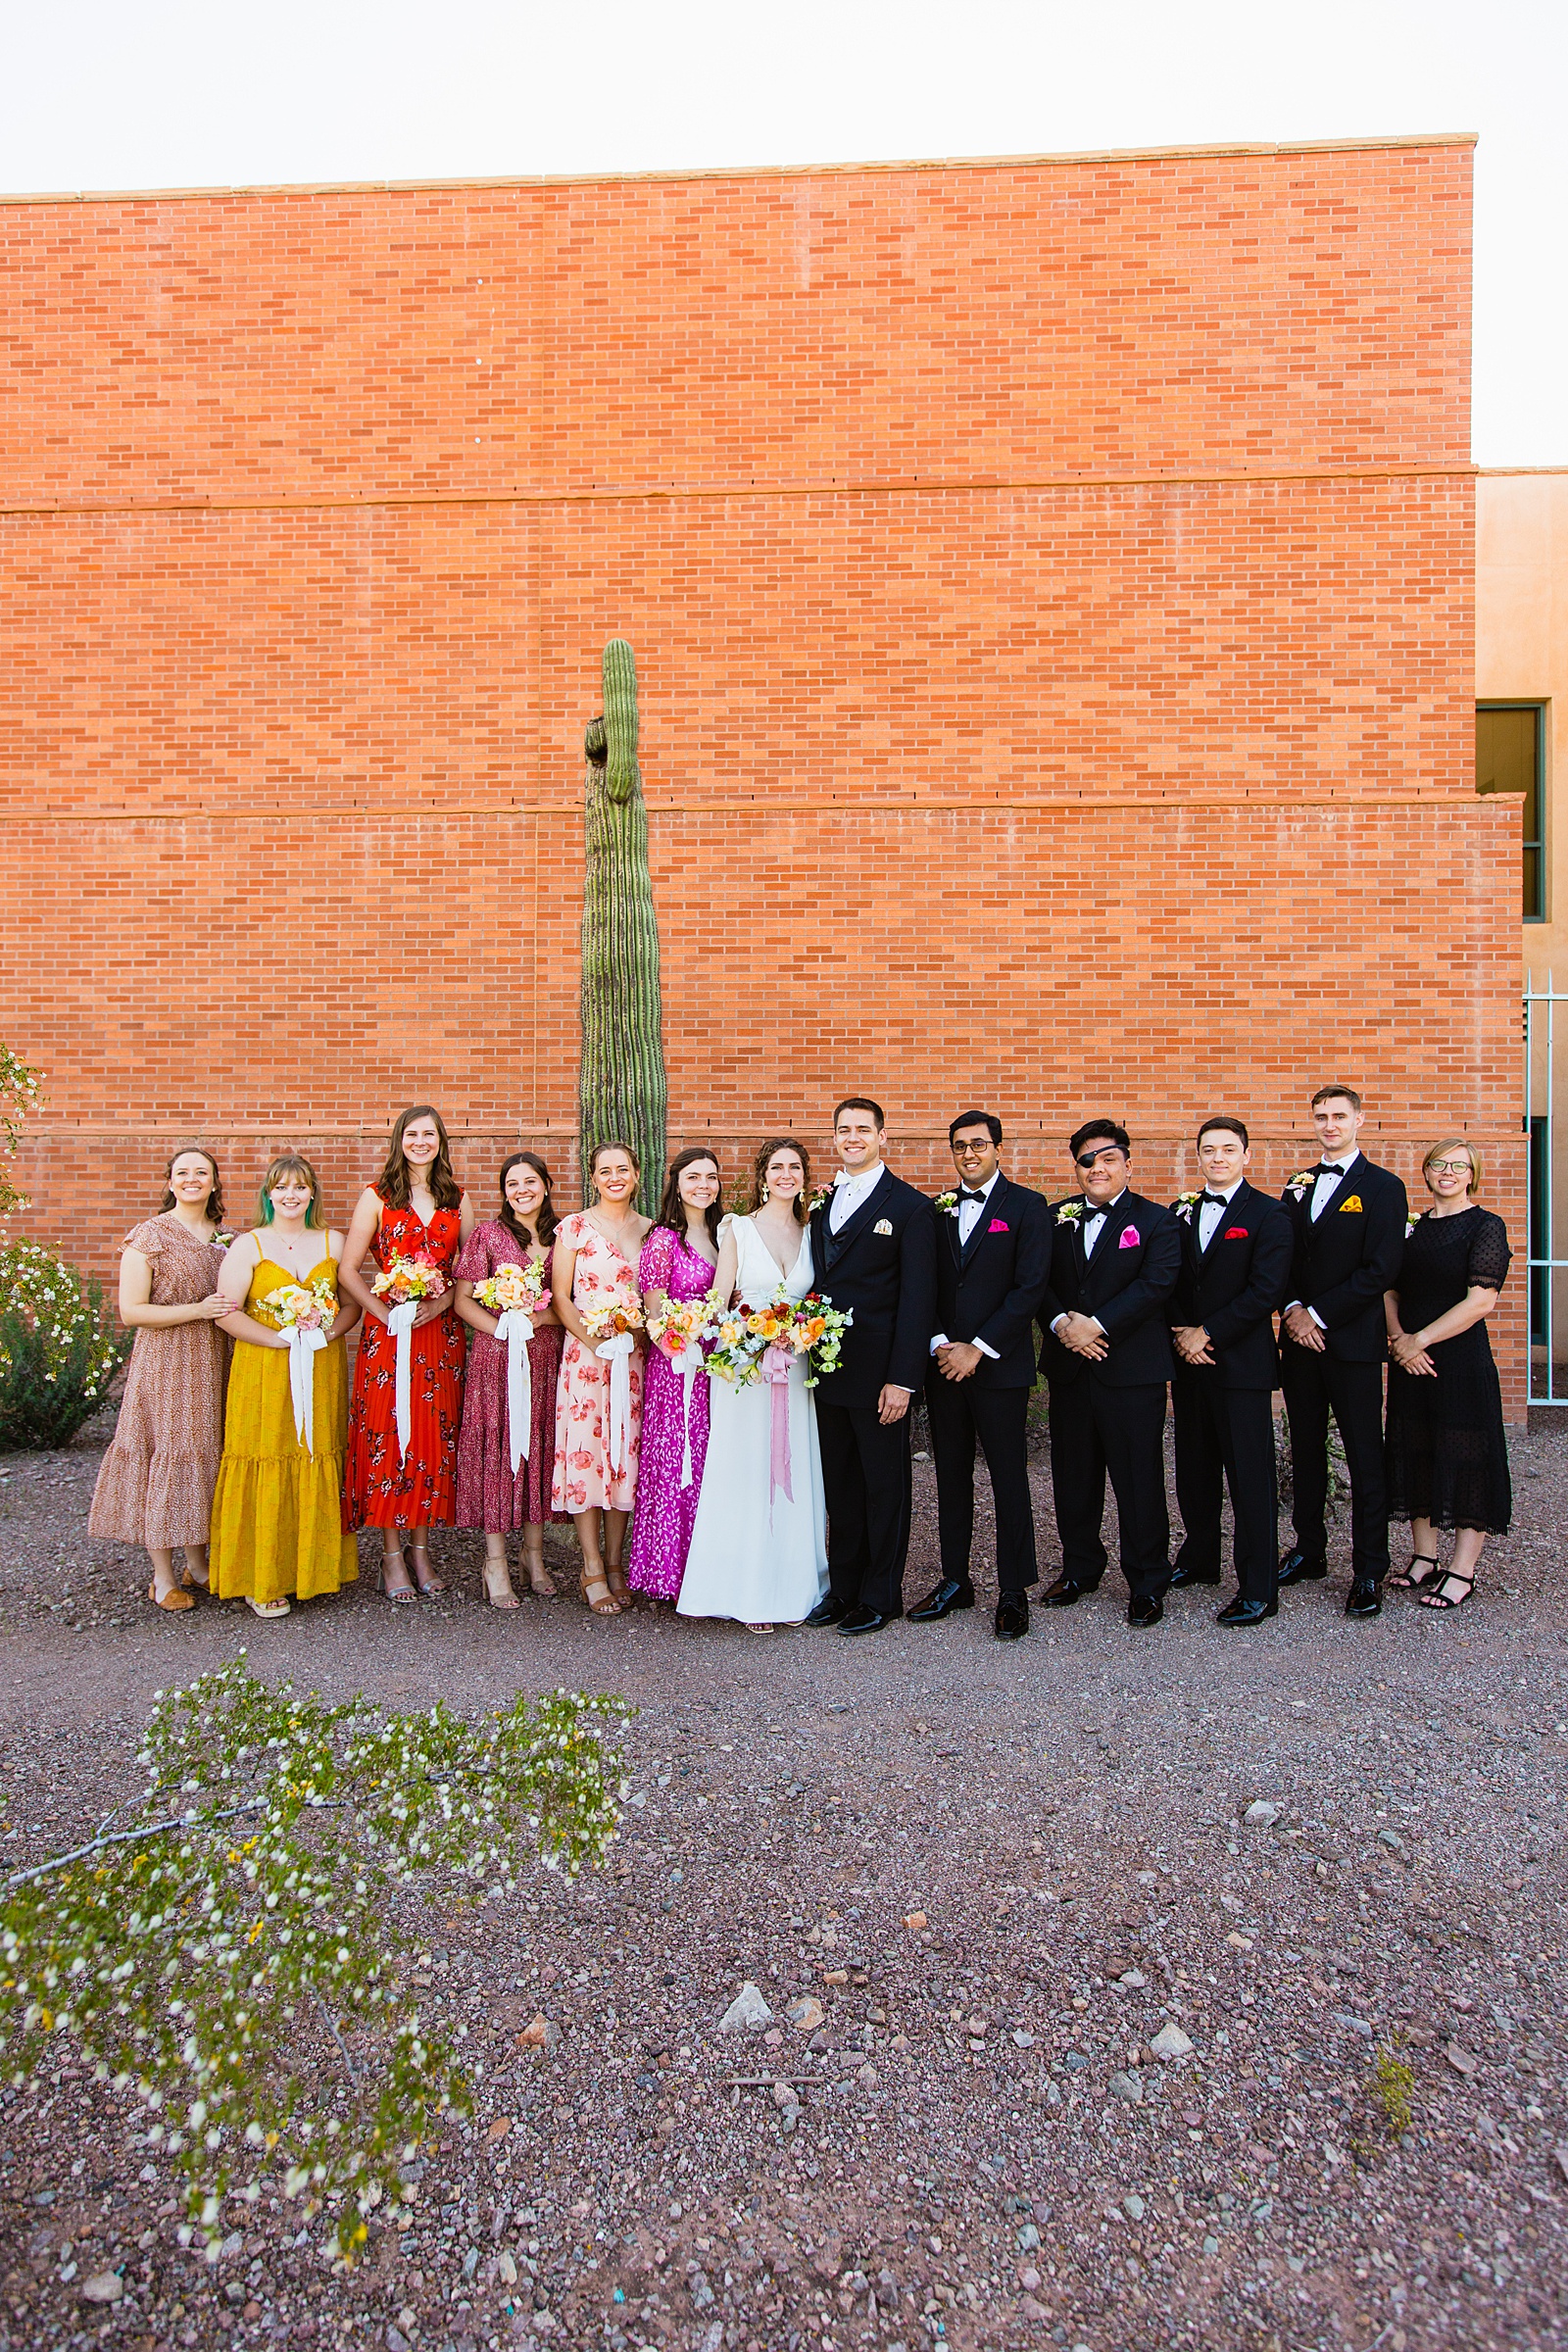 Mixed gender bridal party together at a Arizona Historical Society wedding by Arizona wedding photographer PMA Photography.